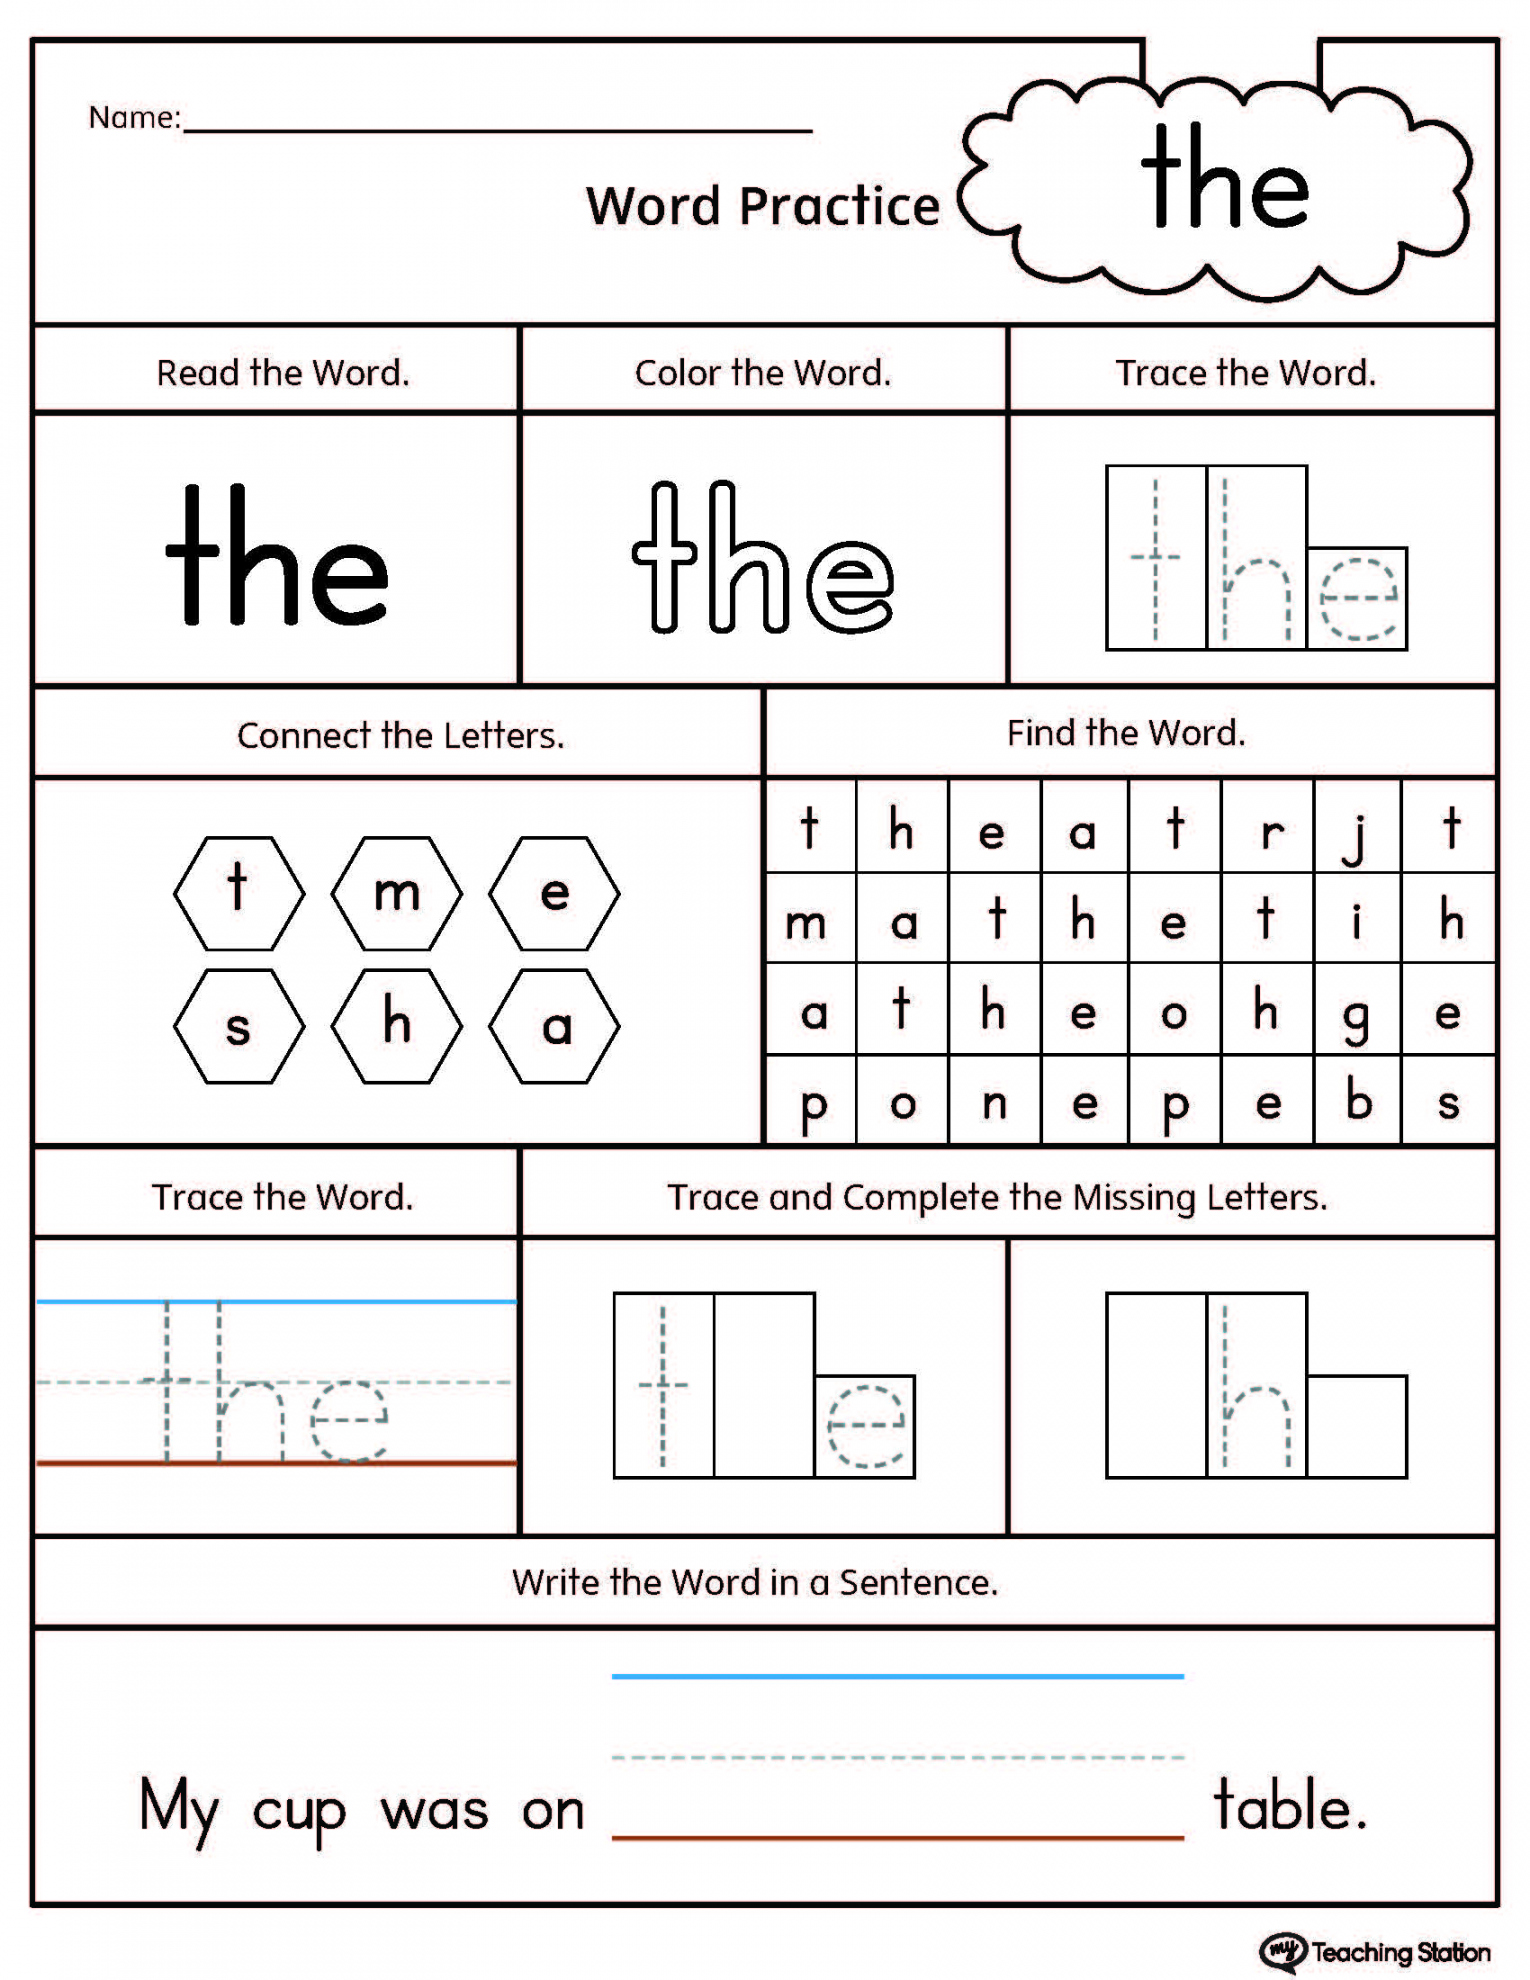 Free Printable Kindergarten Sight Words - Printable - FREE* Sight Word the Printable Worksheet  MyTeachingStation